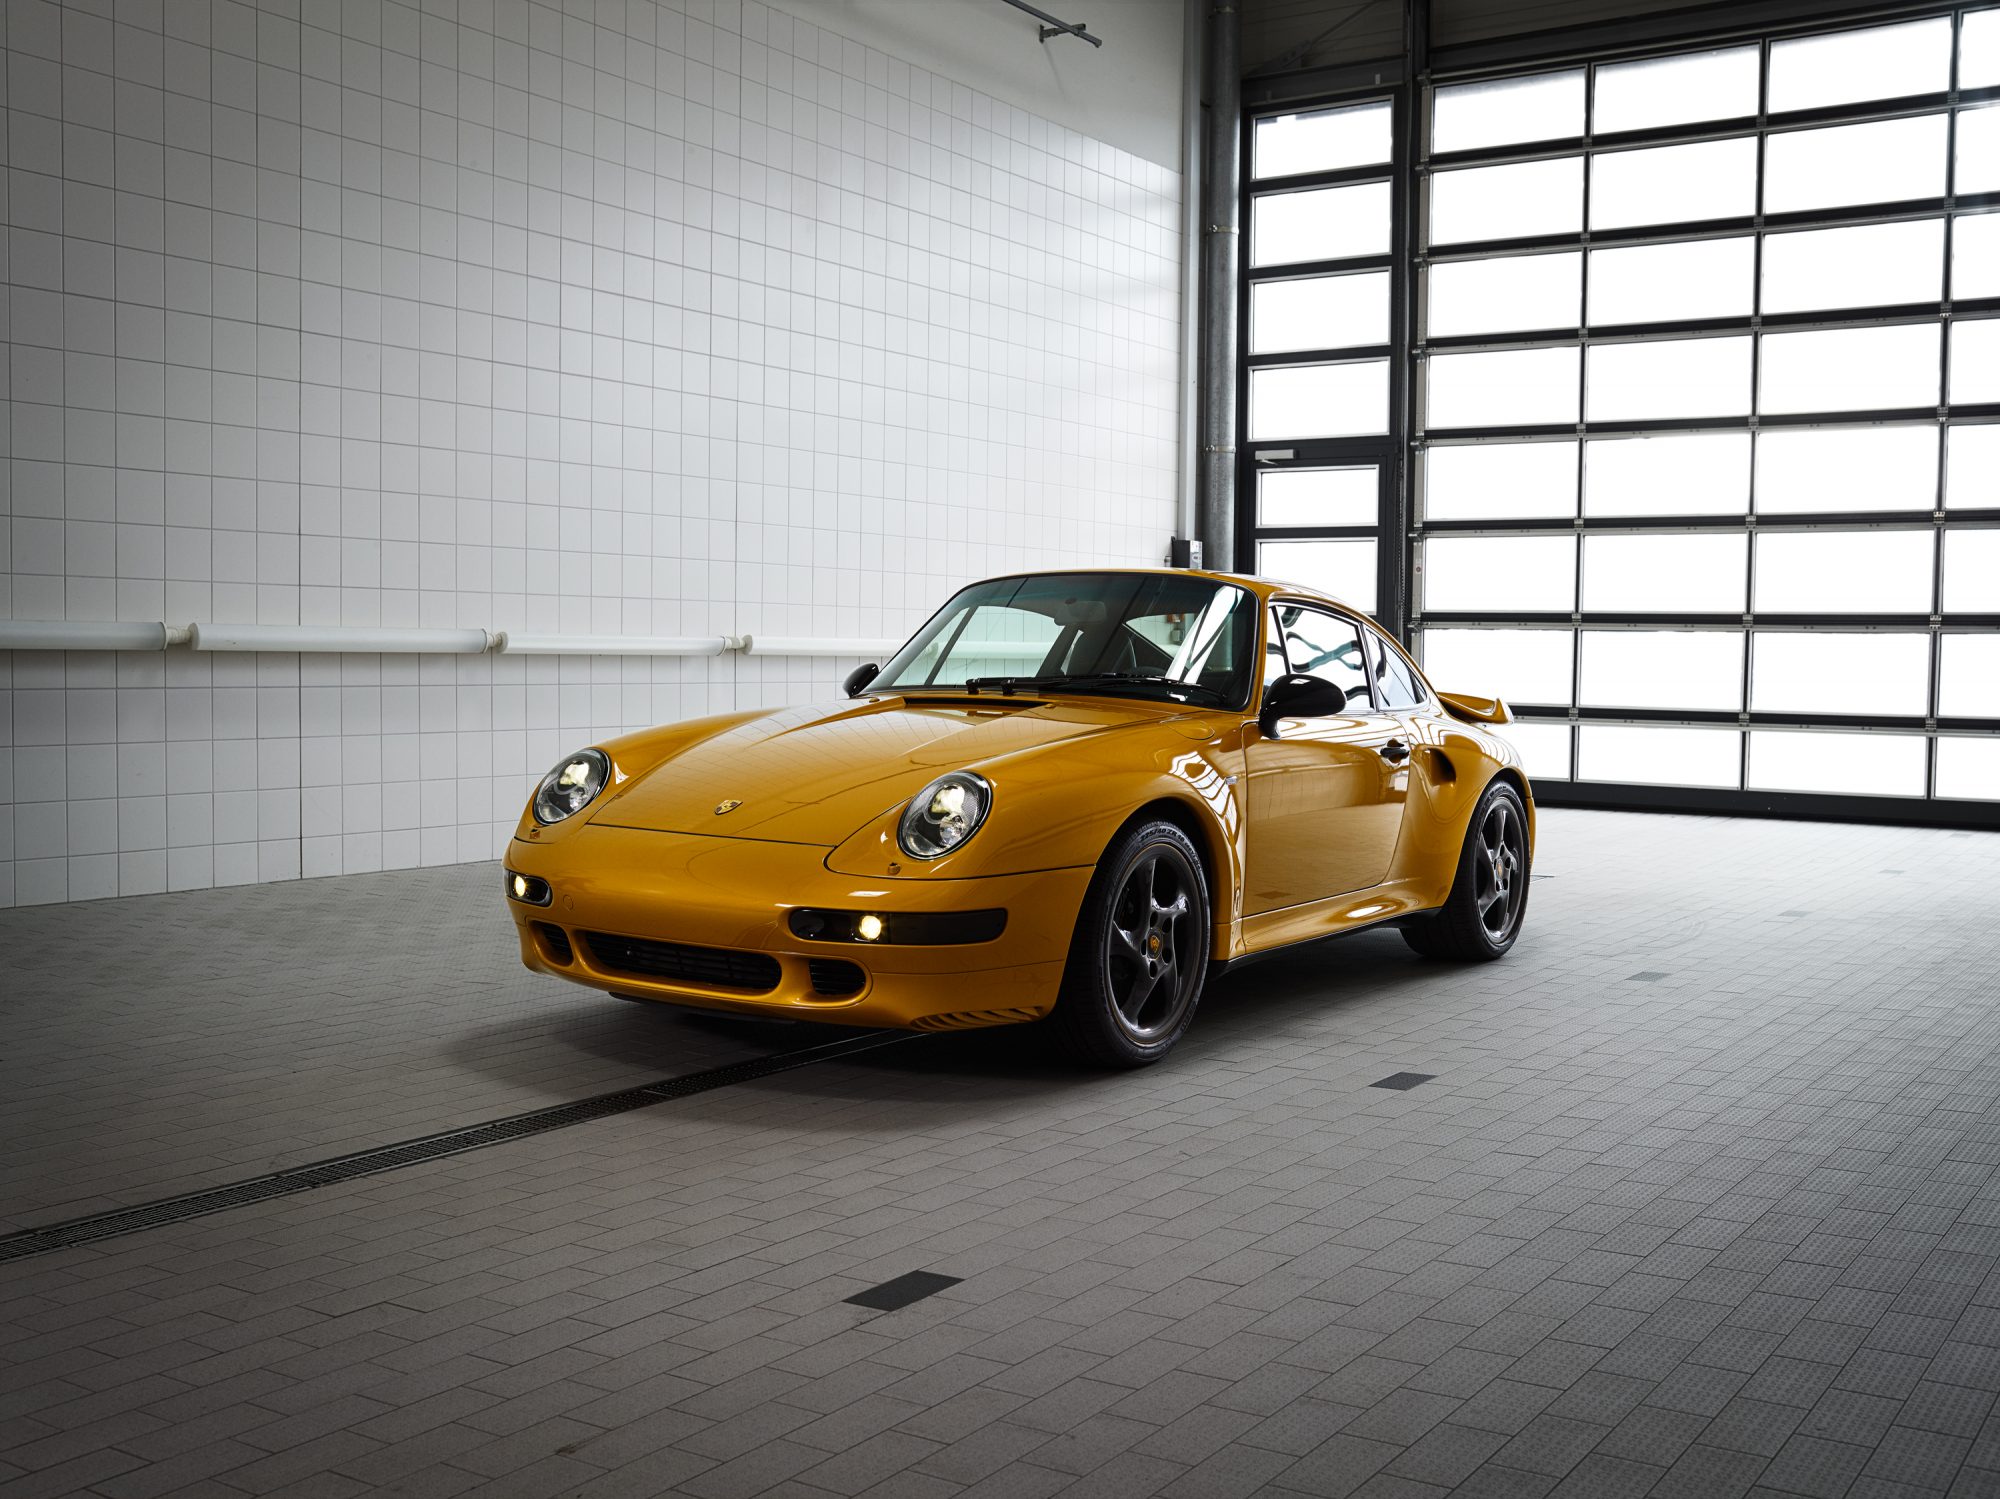 Porsche-993-Turbo-S-Project-Gold-2.jpg